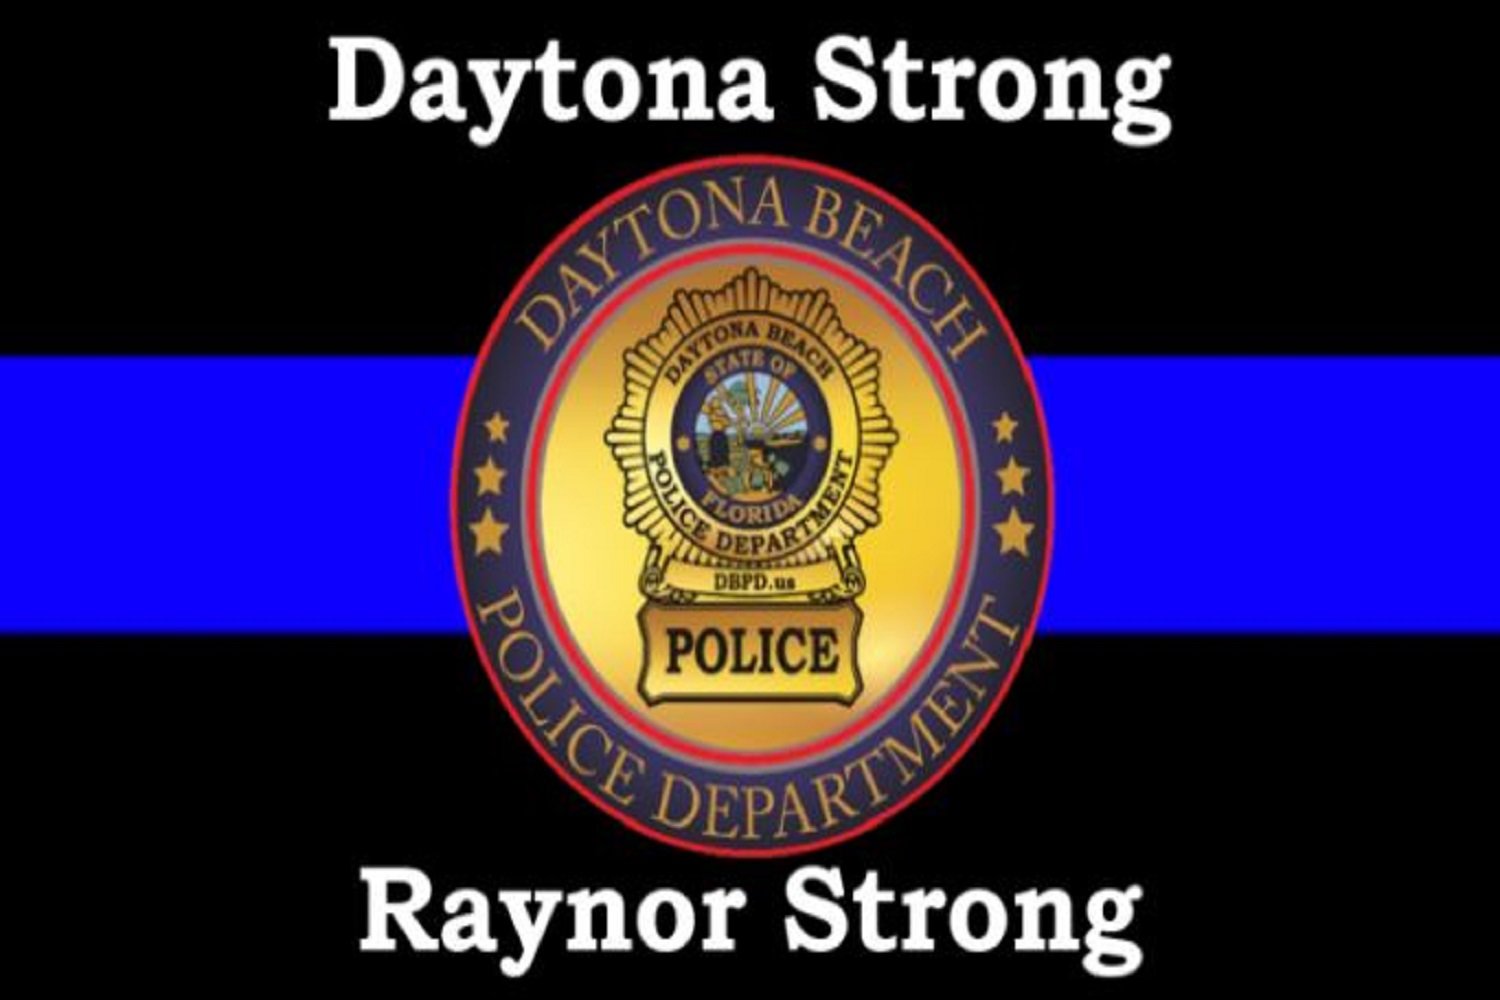 Daytona Strong Raynor Strong